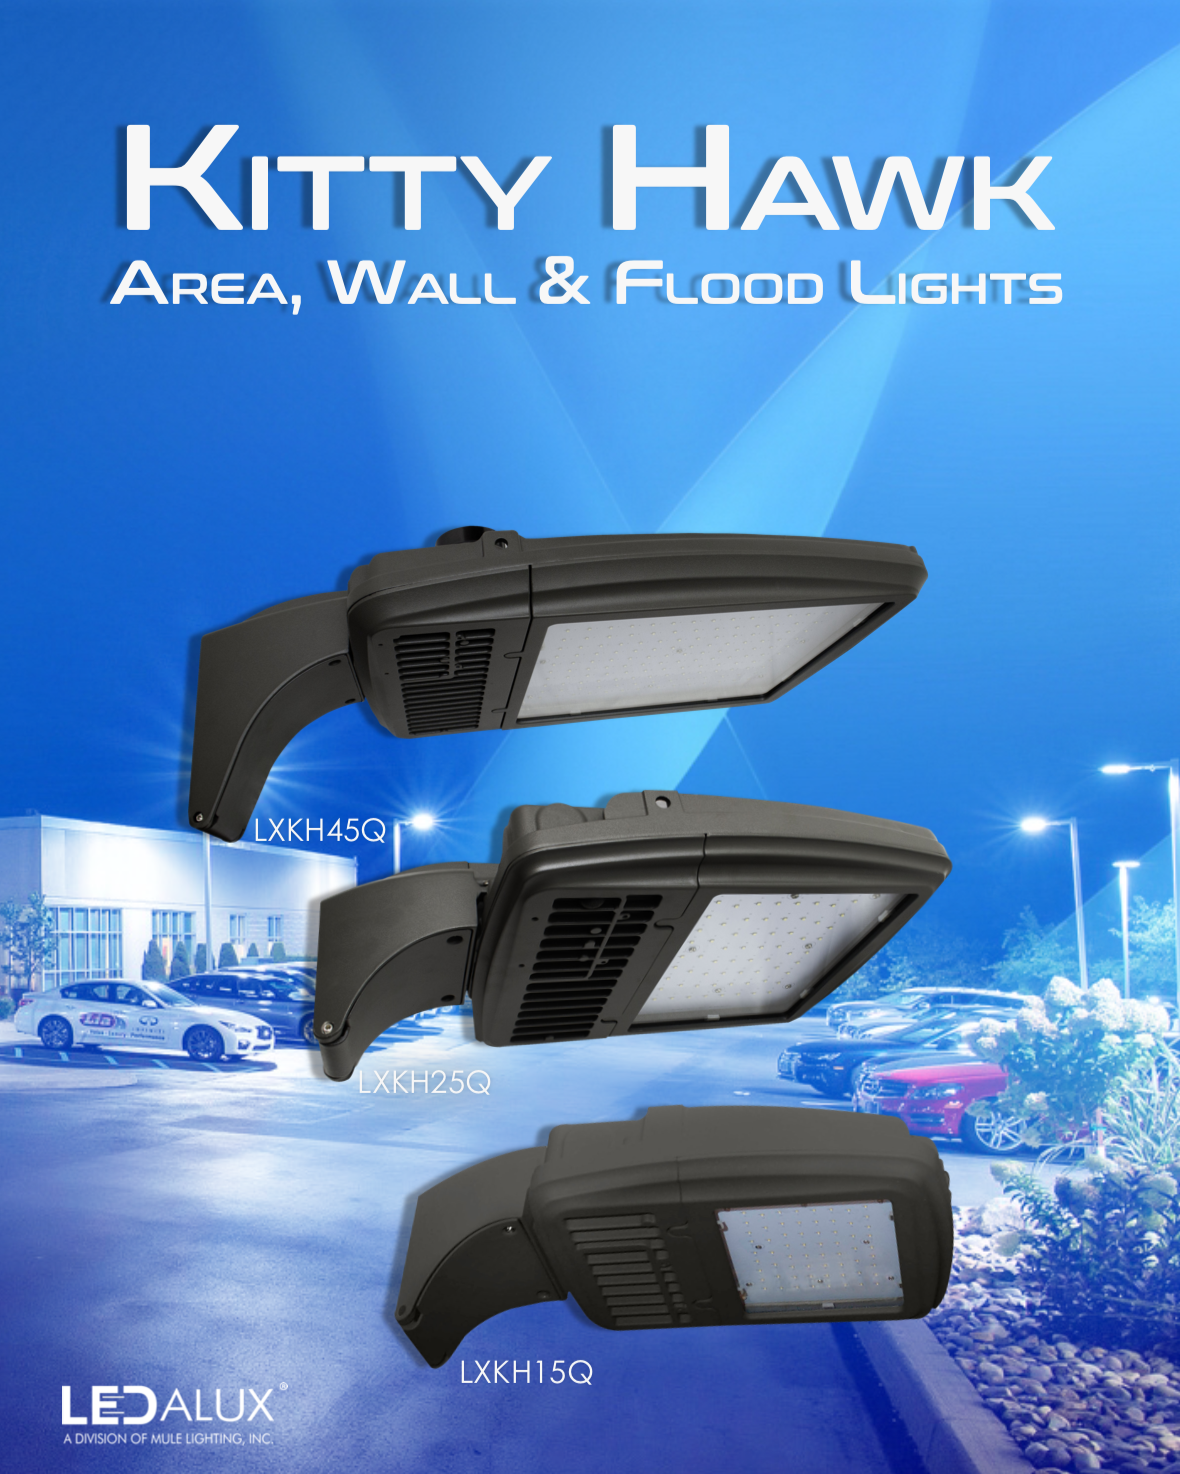 LEDalux Kitty Hawk Area, Wall & Flood Lights Literature